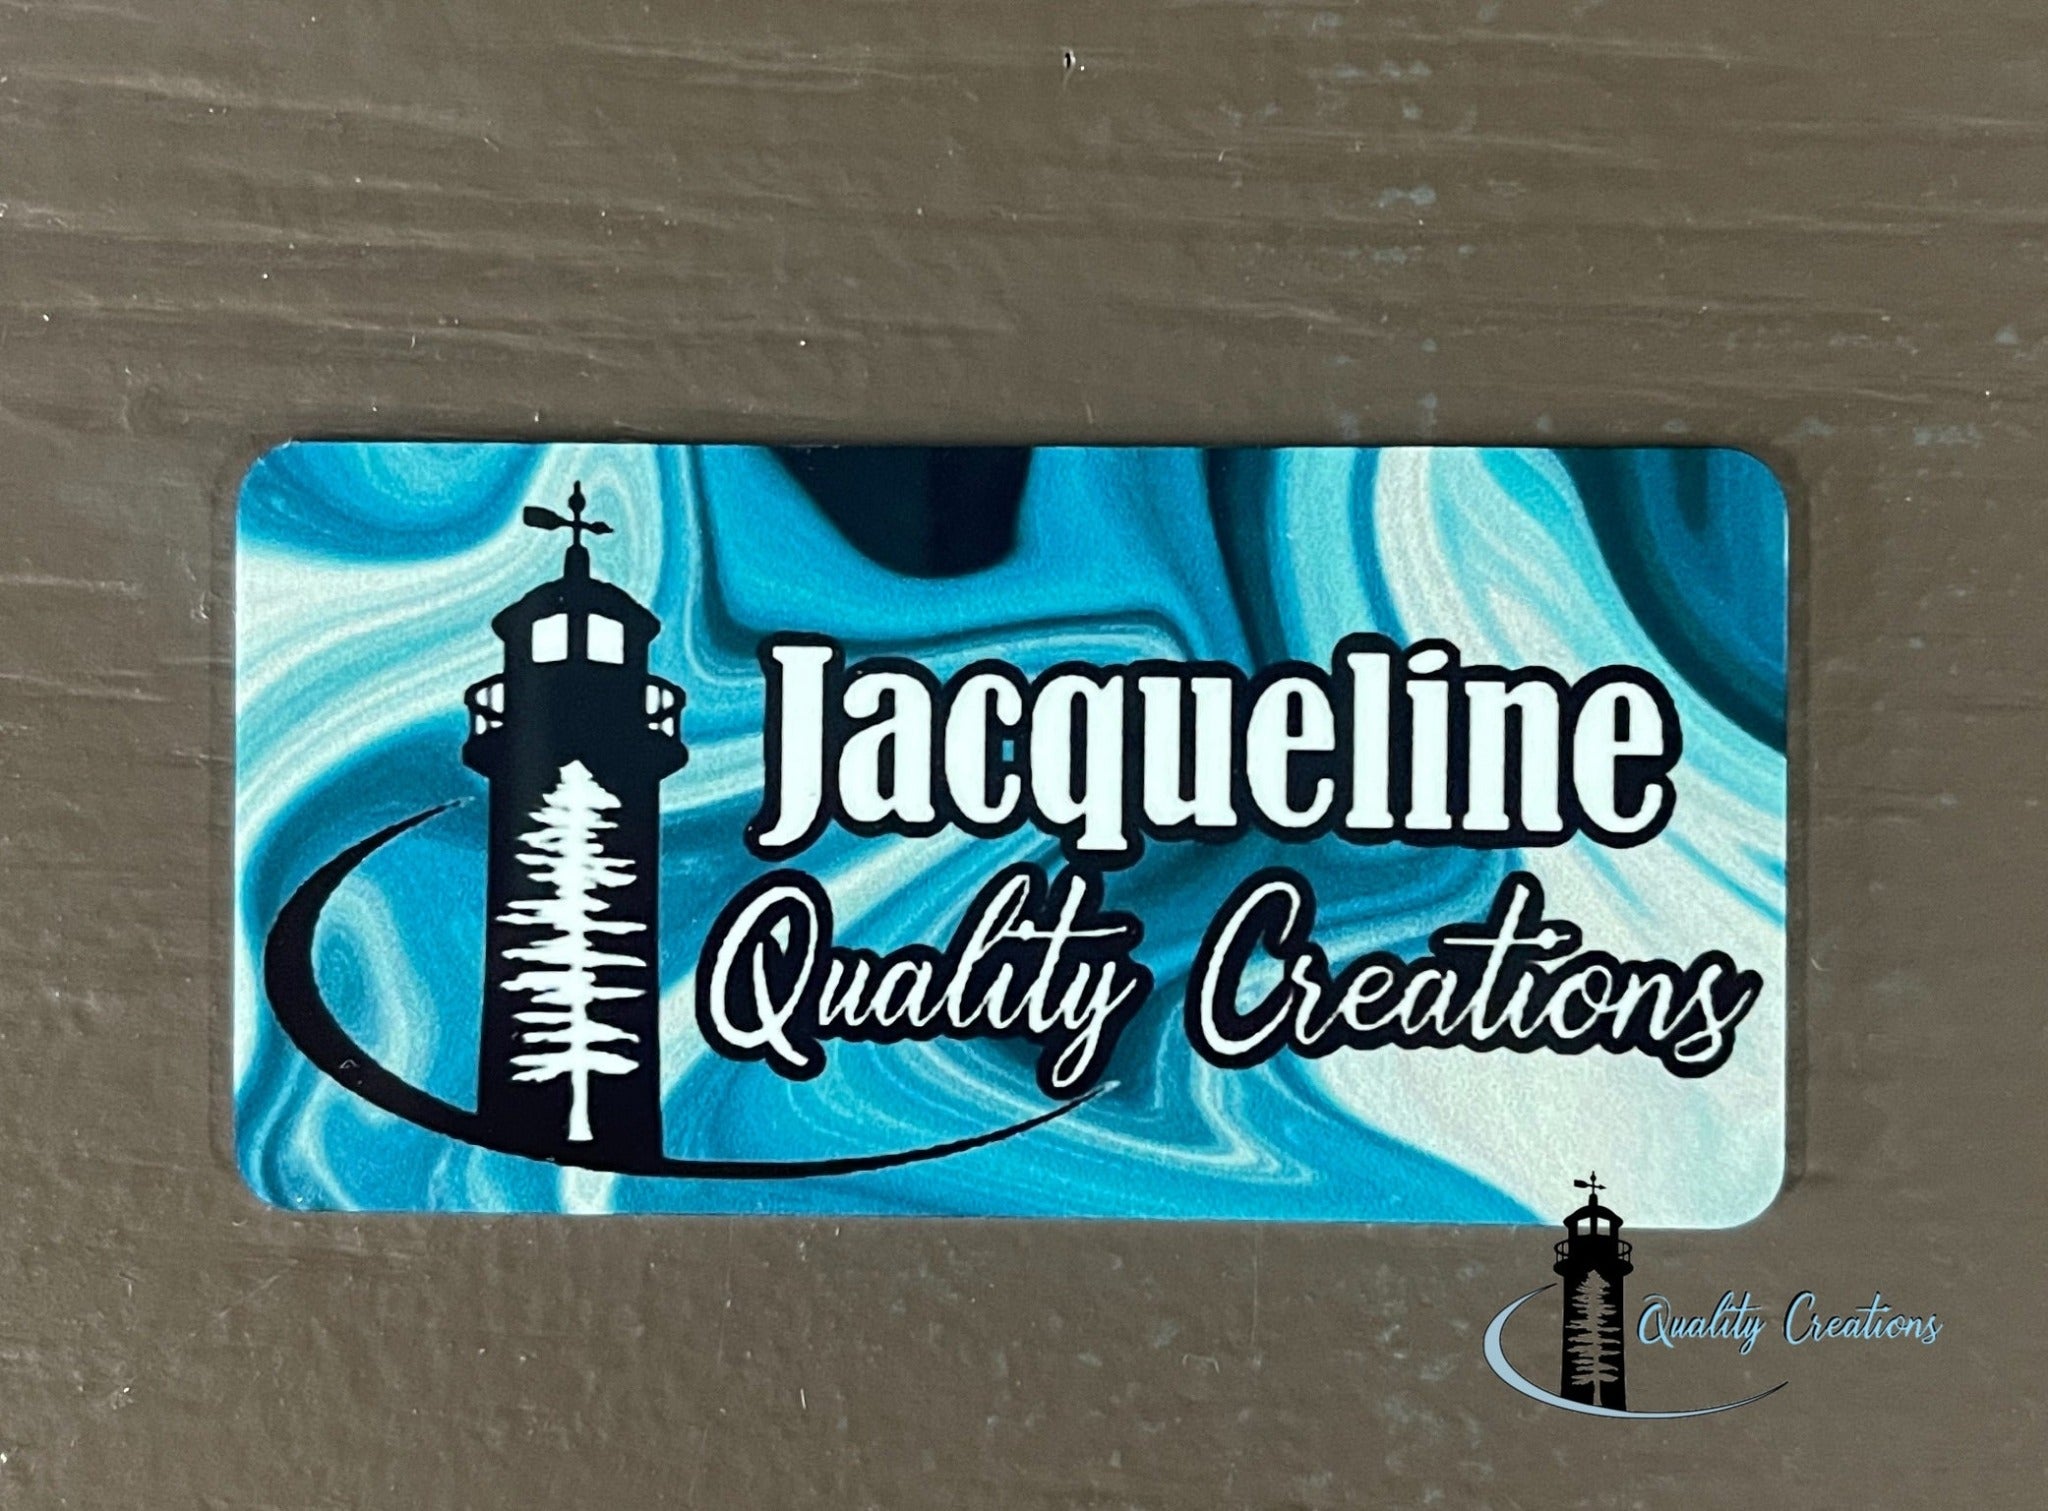  magnetic name tag logo business quality creations moncton salsibury canada newbrunswick